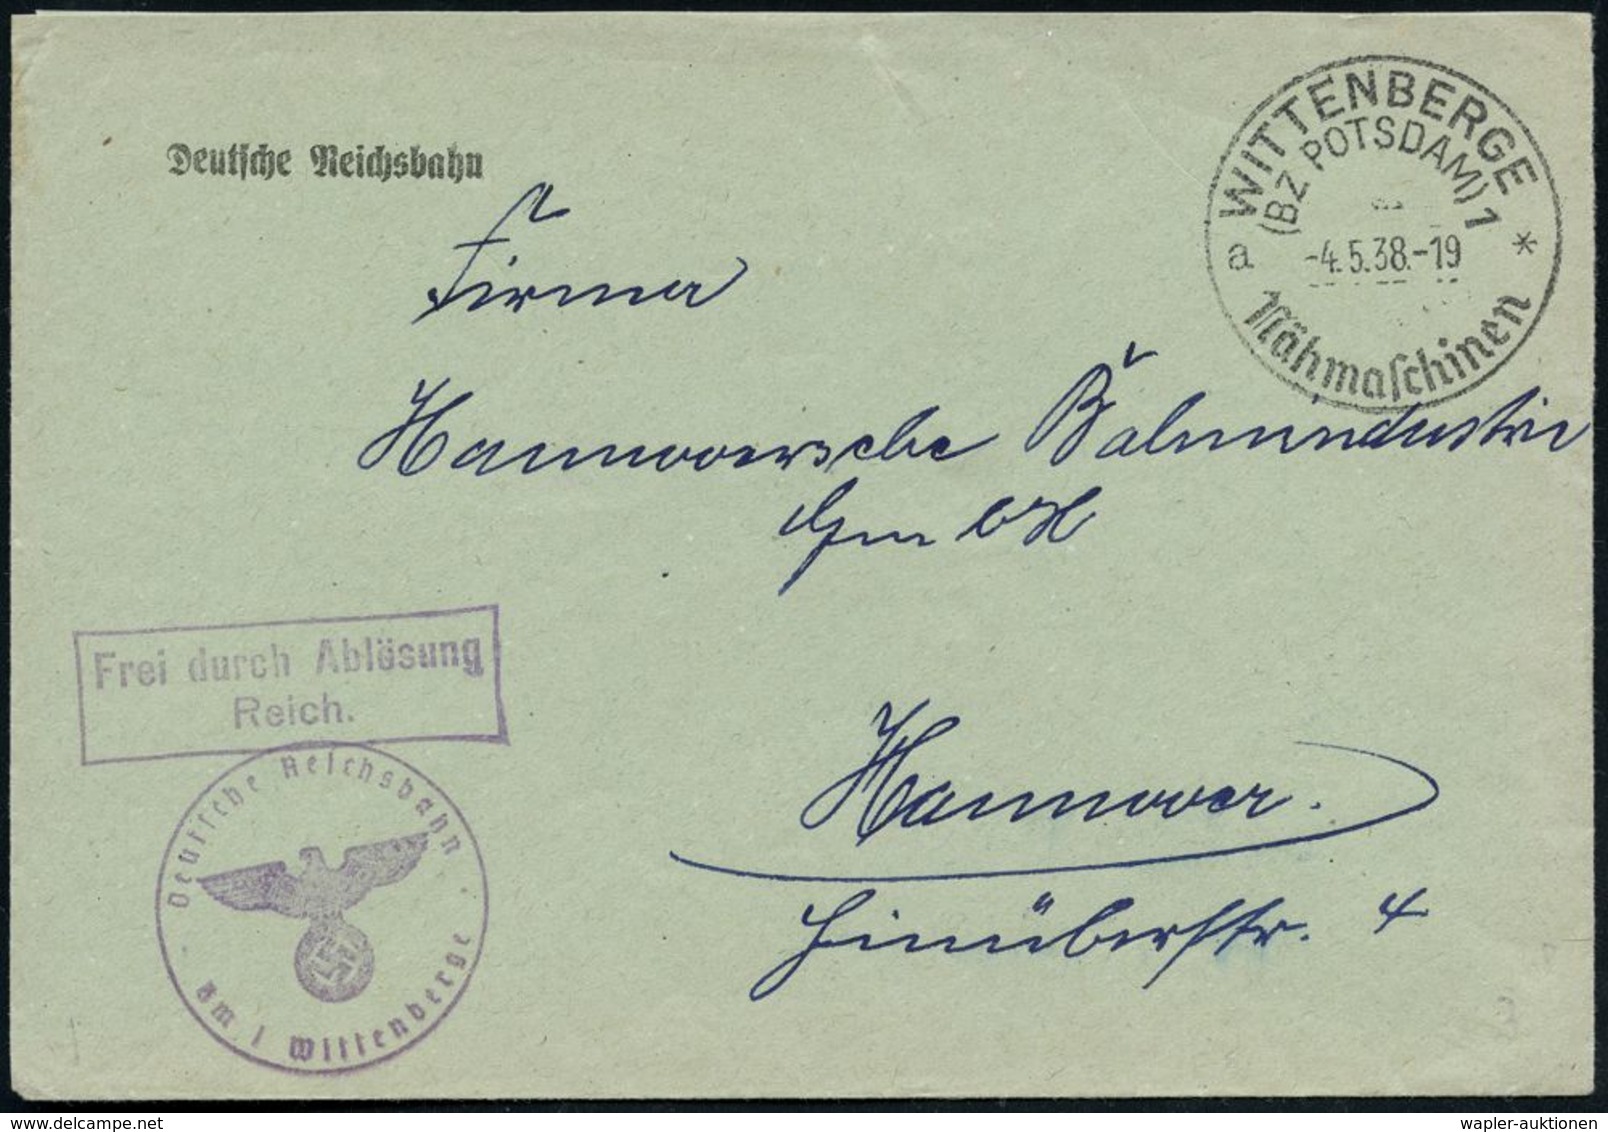 EISENBAHN-GESELLSCHAFTEN / REICHSBAHN / BUNDESBAHN : WITTENBERGE/ (BZ POTSDAM)1/ A/ Nähmaschinen 1938 (4.5.) HWSt + Ra.2 - Eisenbahnen